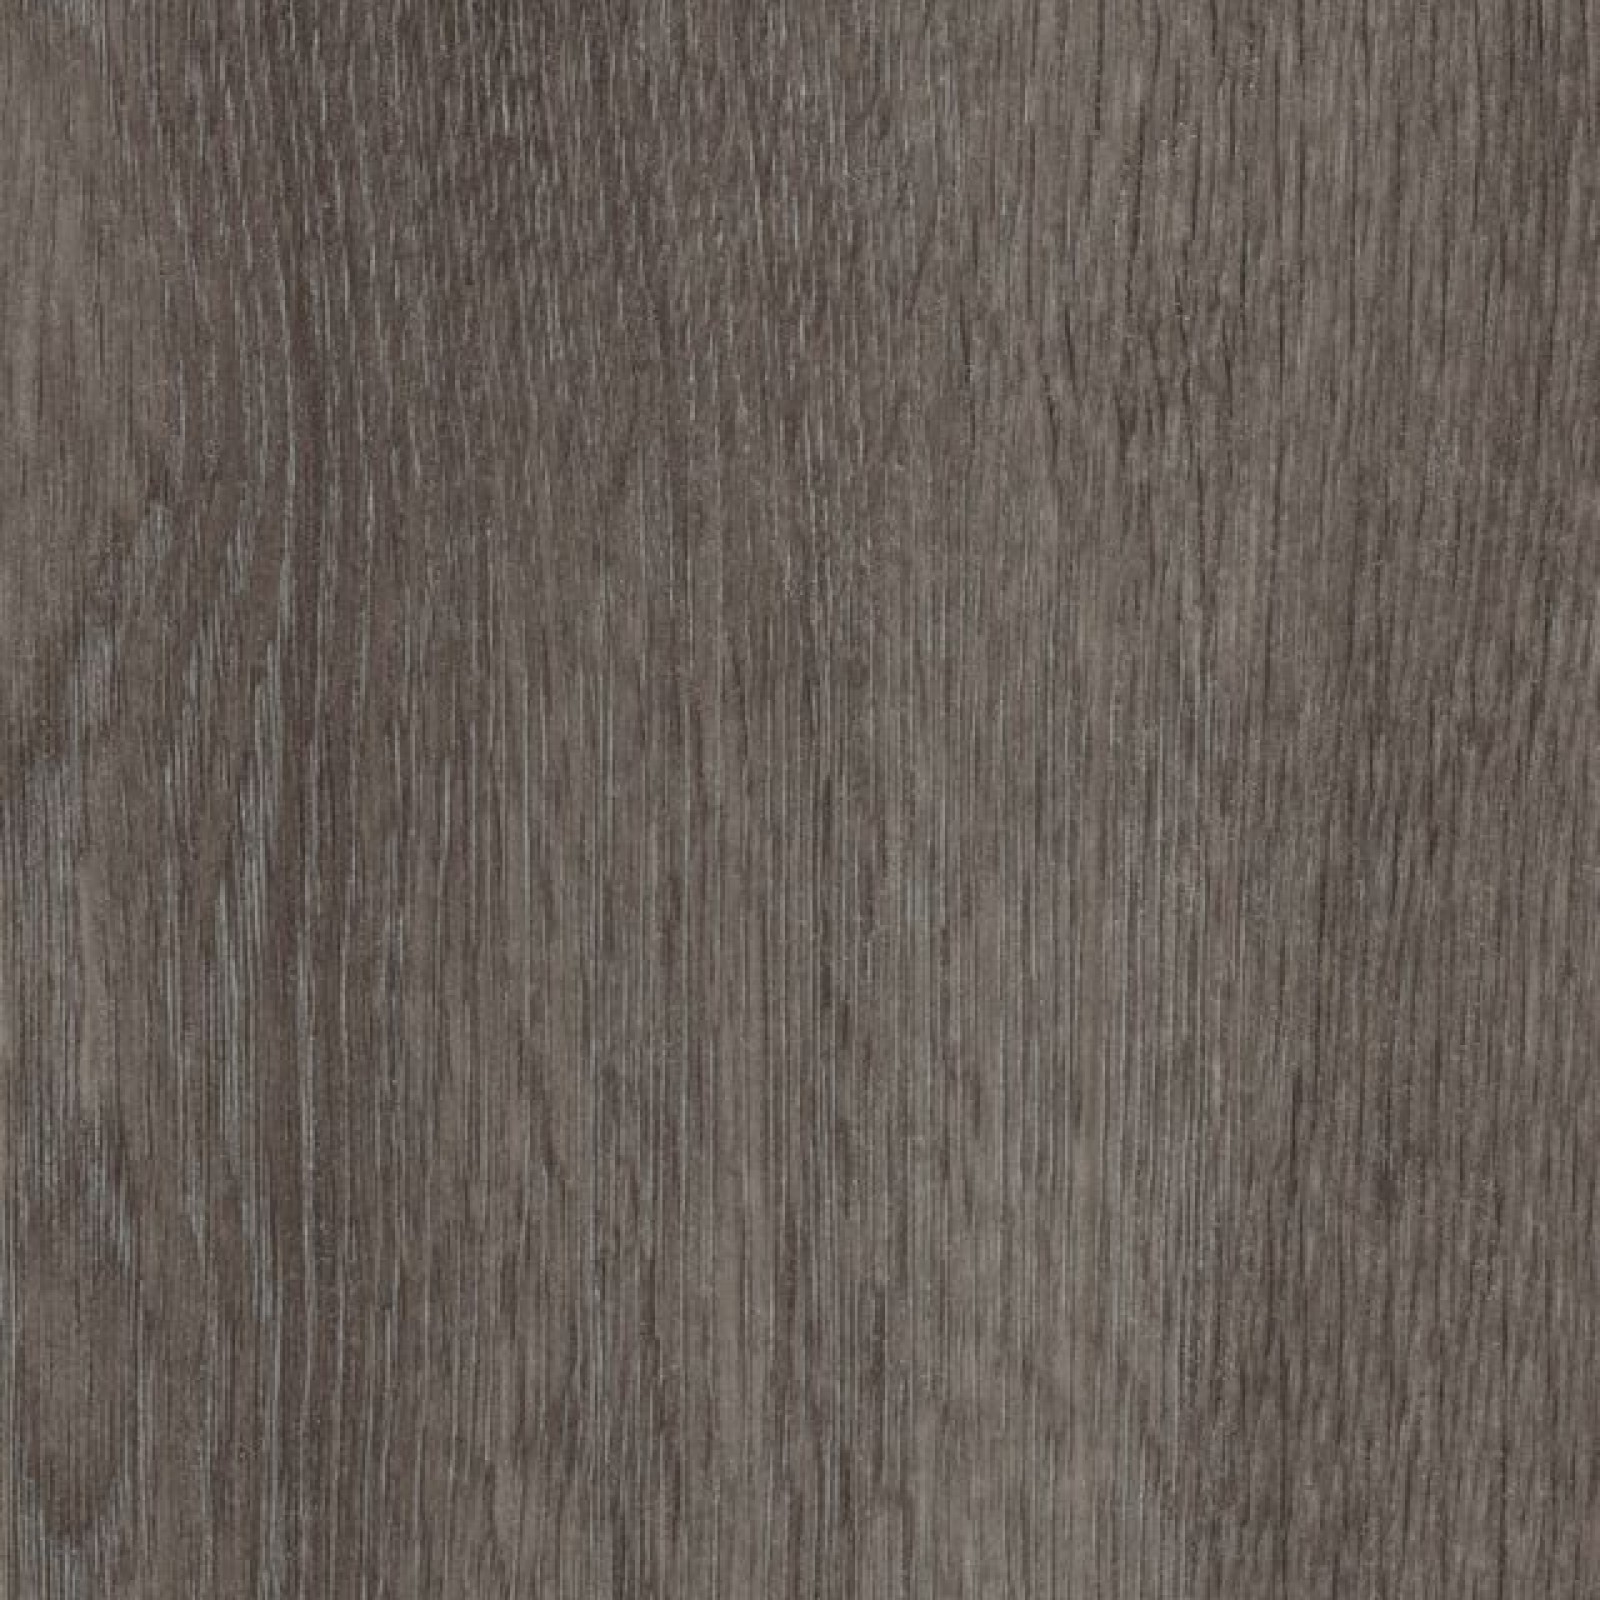 Vzor - 60375 grey collage oak